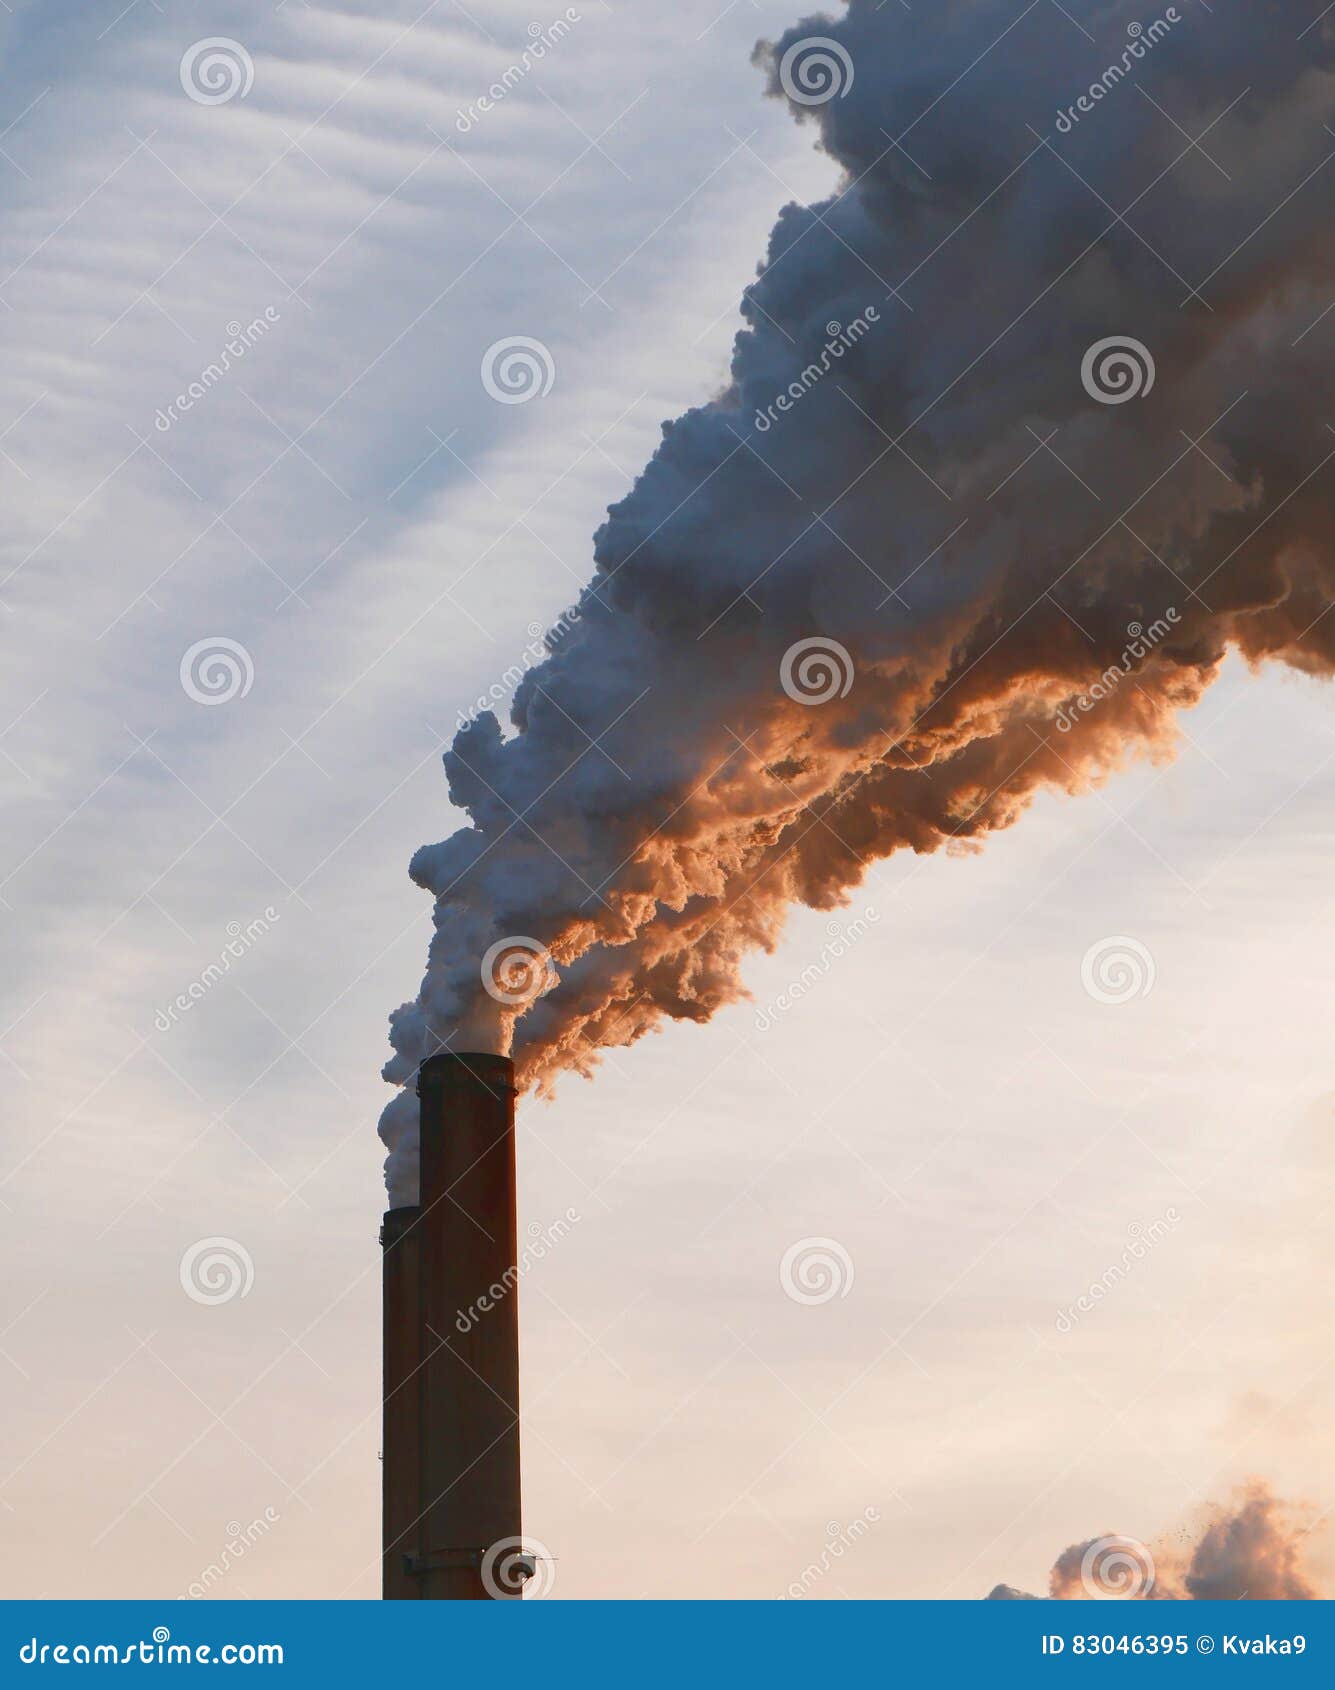 burning coal pollution